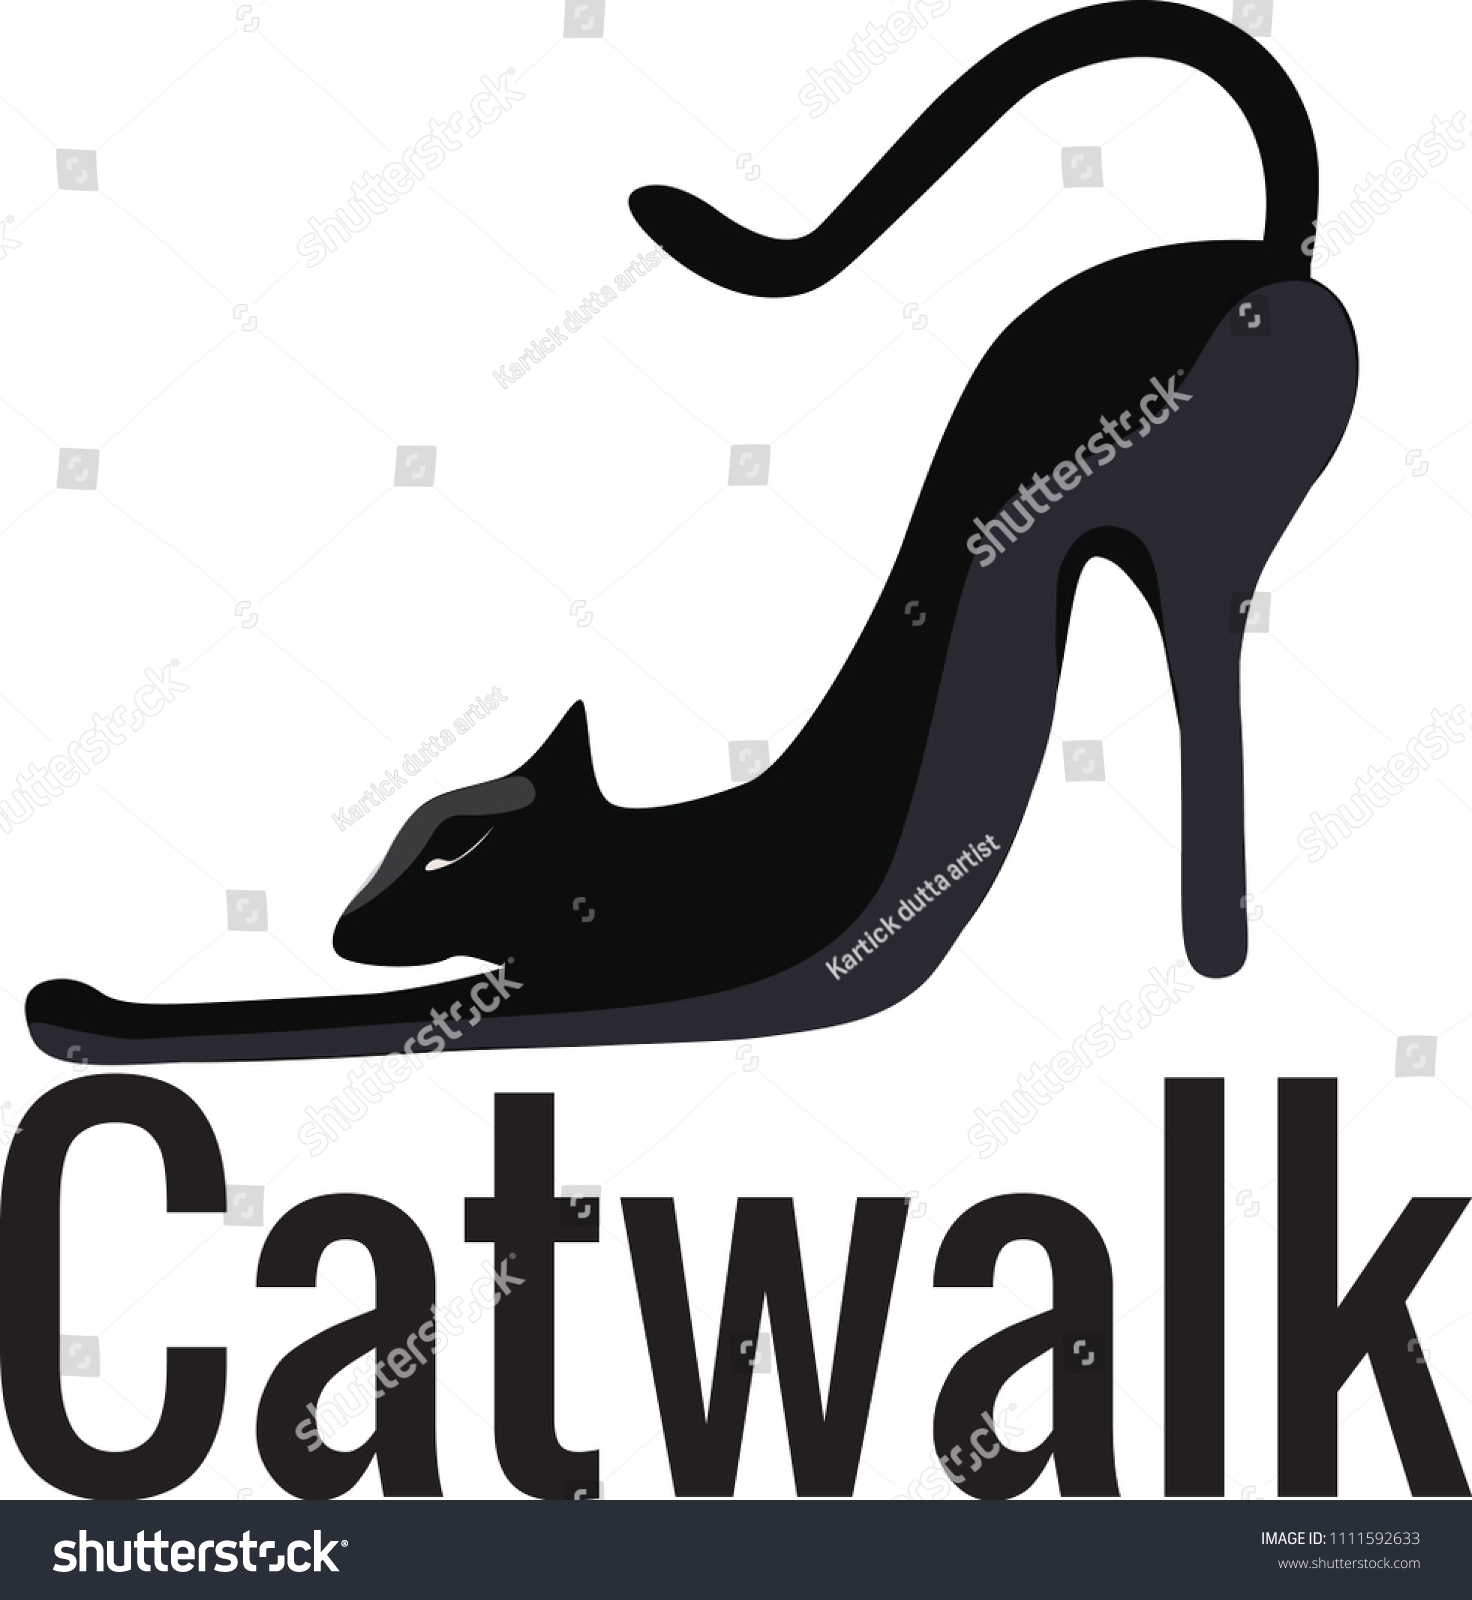 Kosciuszko vindruer Psykiatri Typography Word Illustration Catwalk Logo Illustration Stock Vector  (Royalty Free) 1111592633